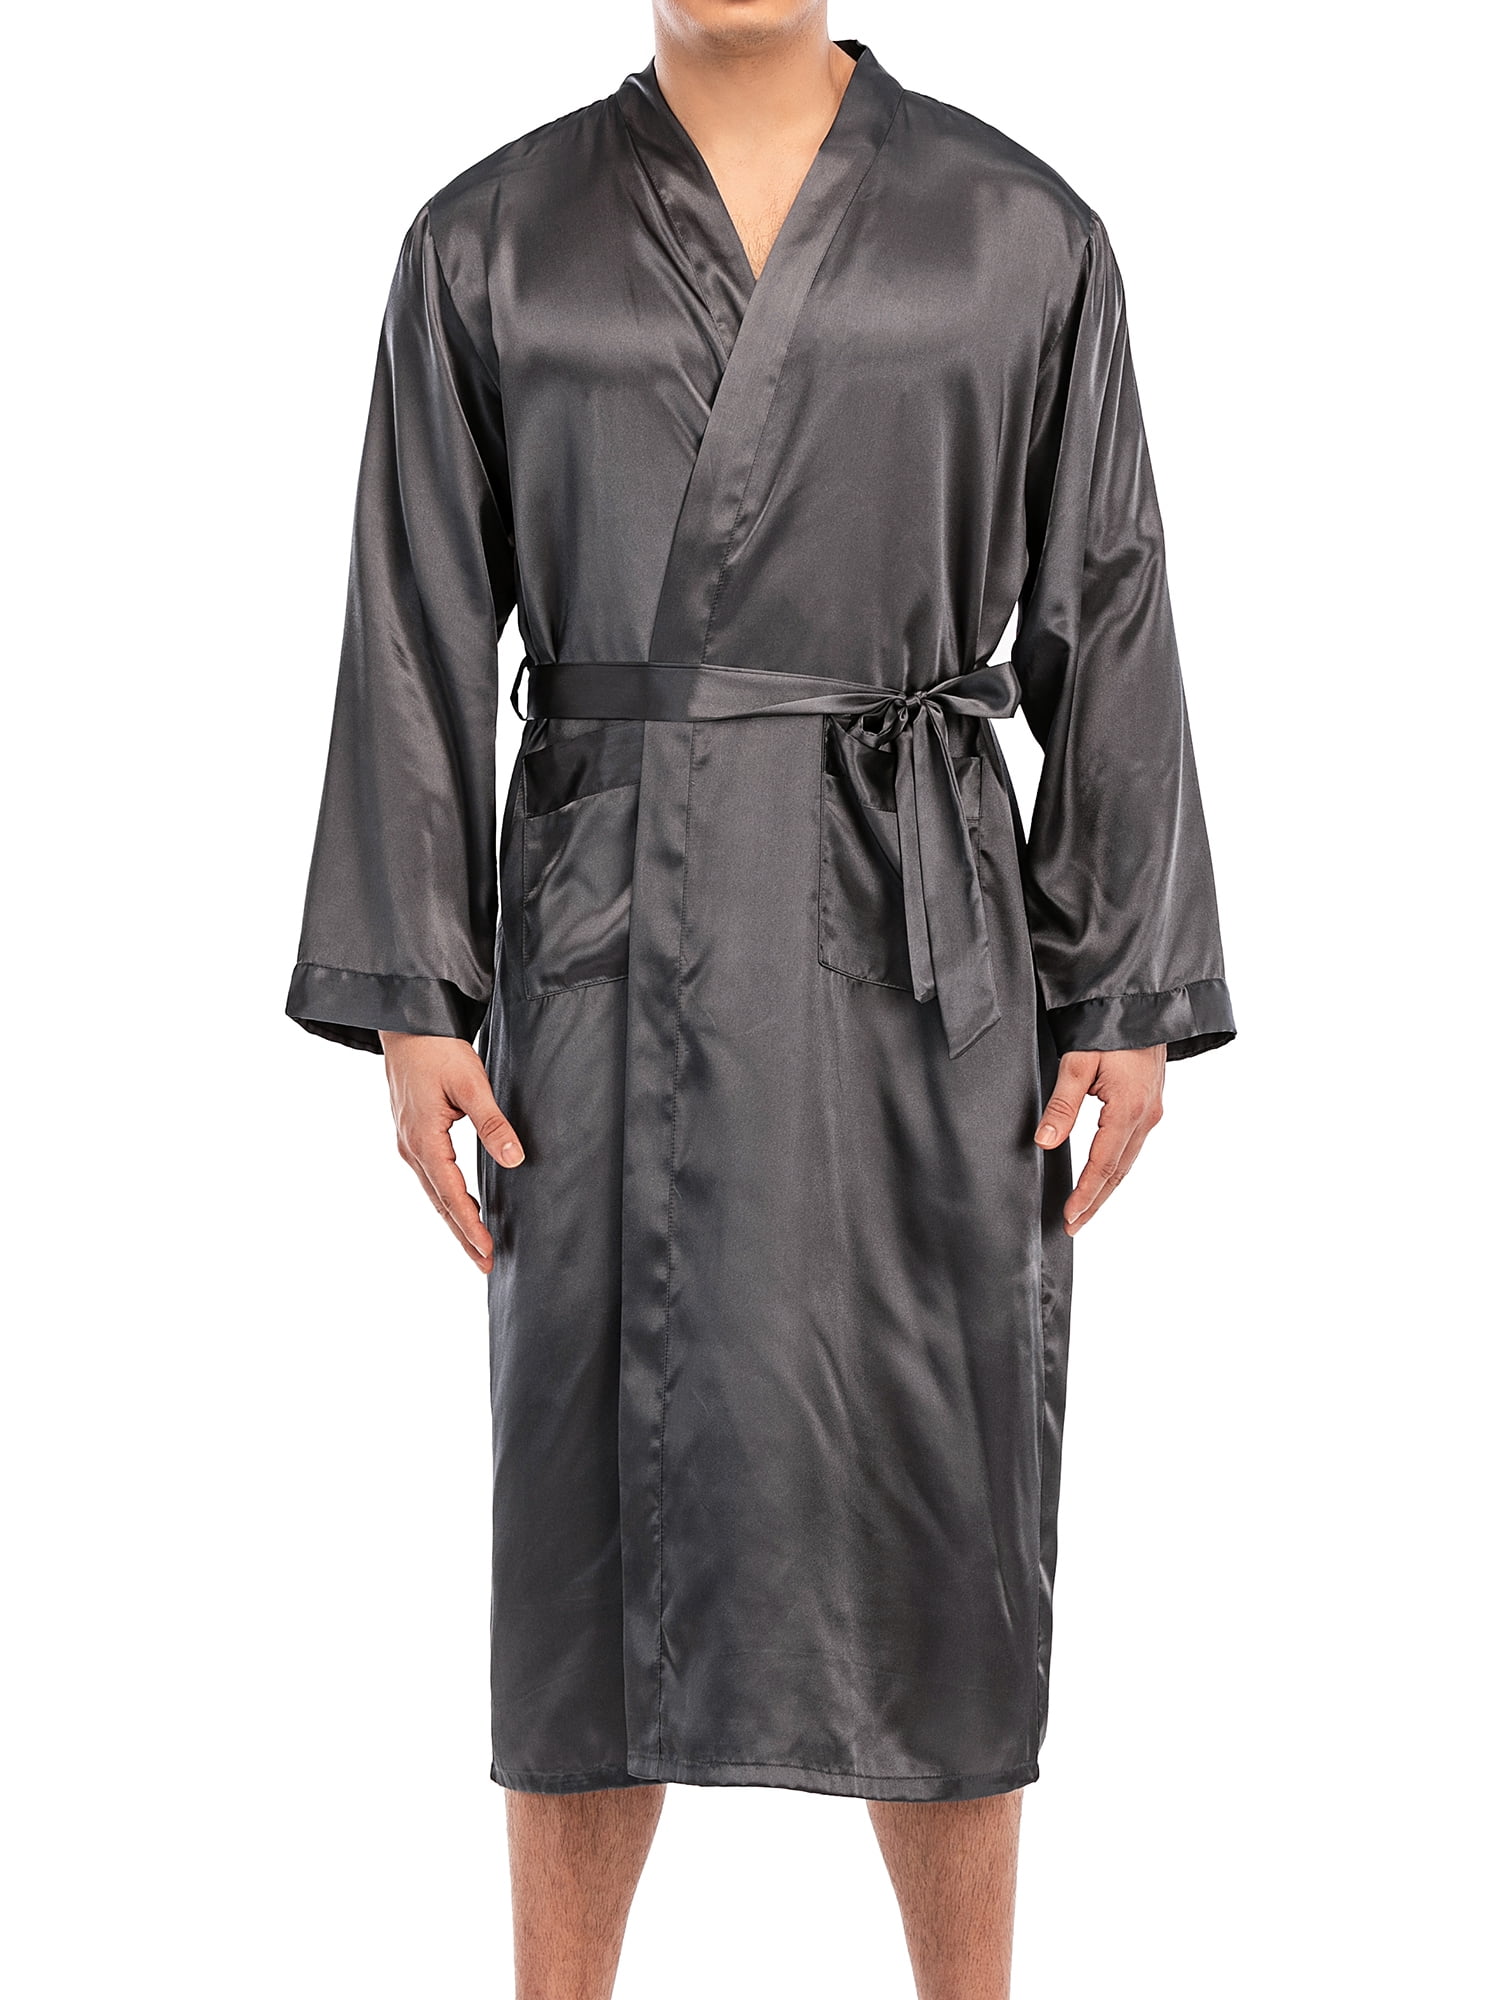 YIMANIE Mens Satin Robe Lightweight Silk Spa Bathrobe with Shorts Nightgown Long Sleeve House Kimono Printed Bathrobe Set